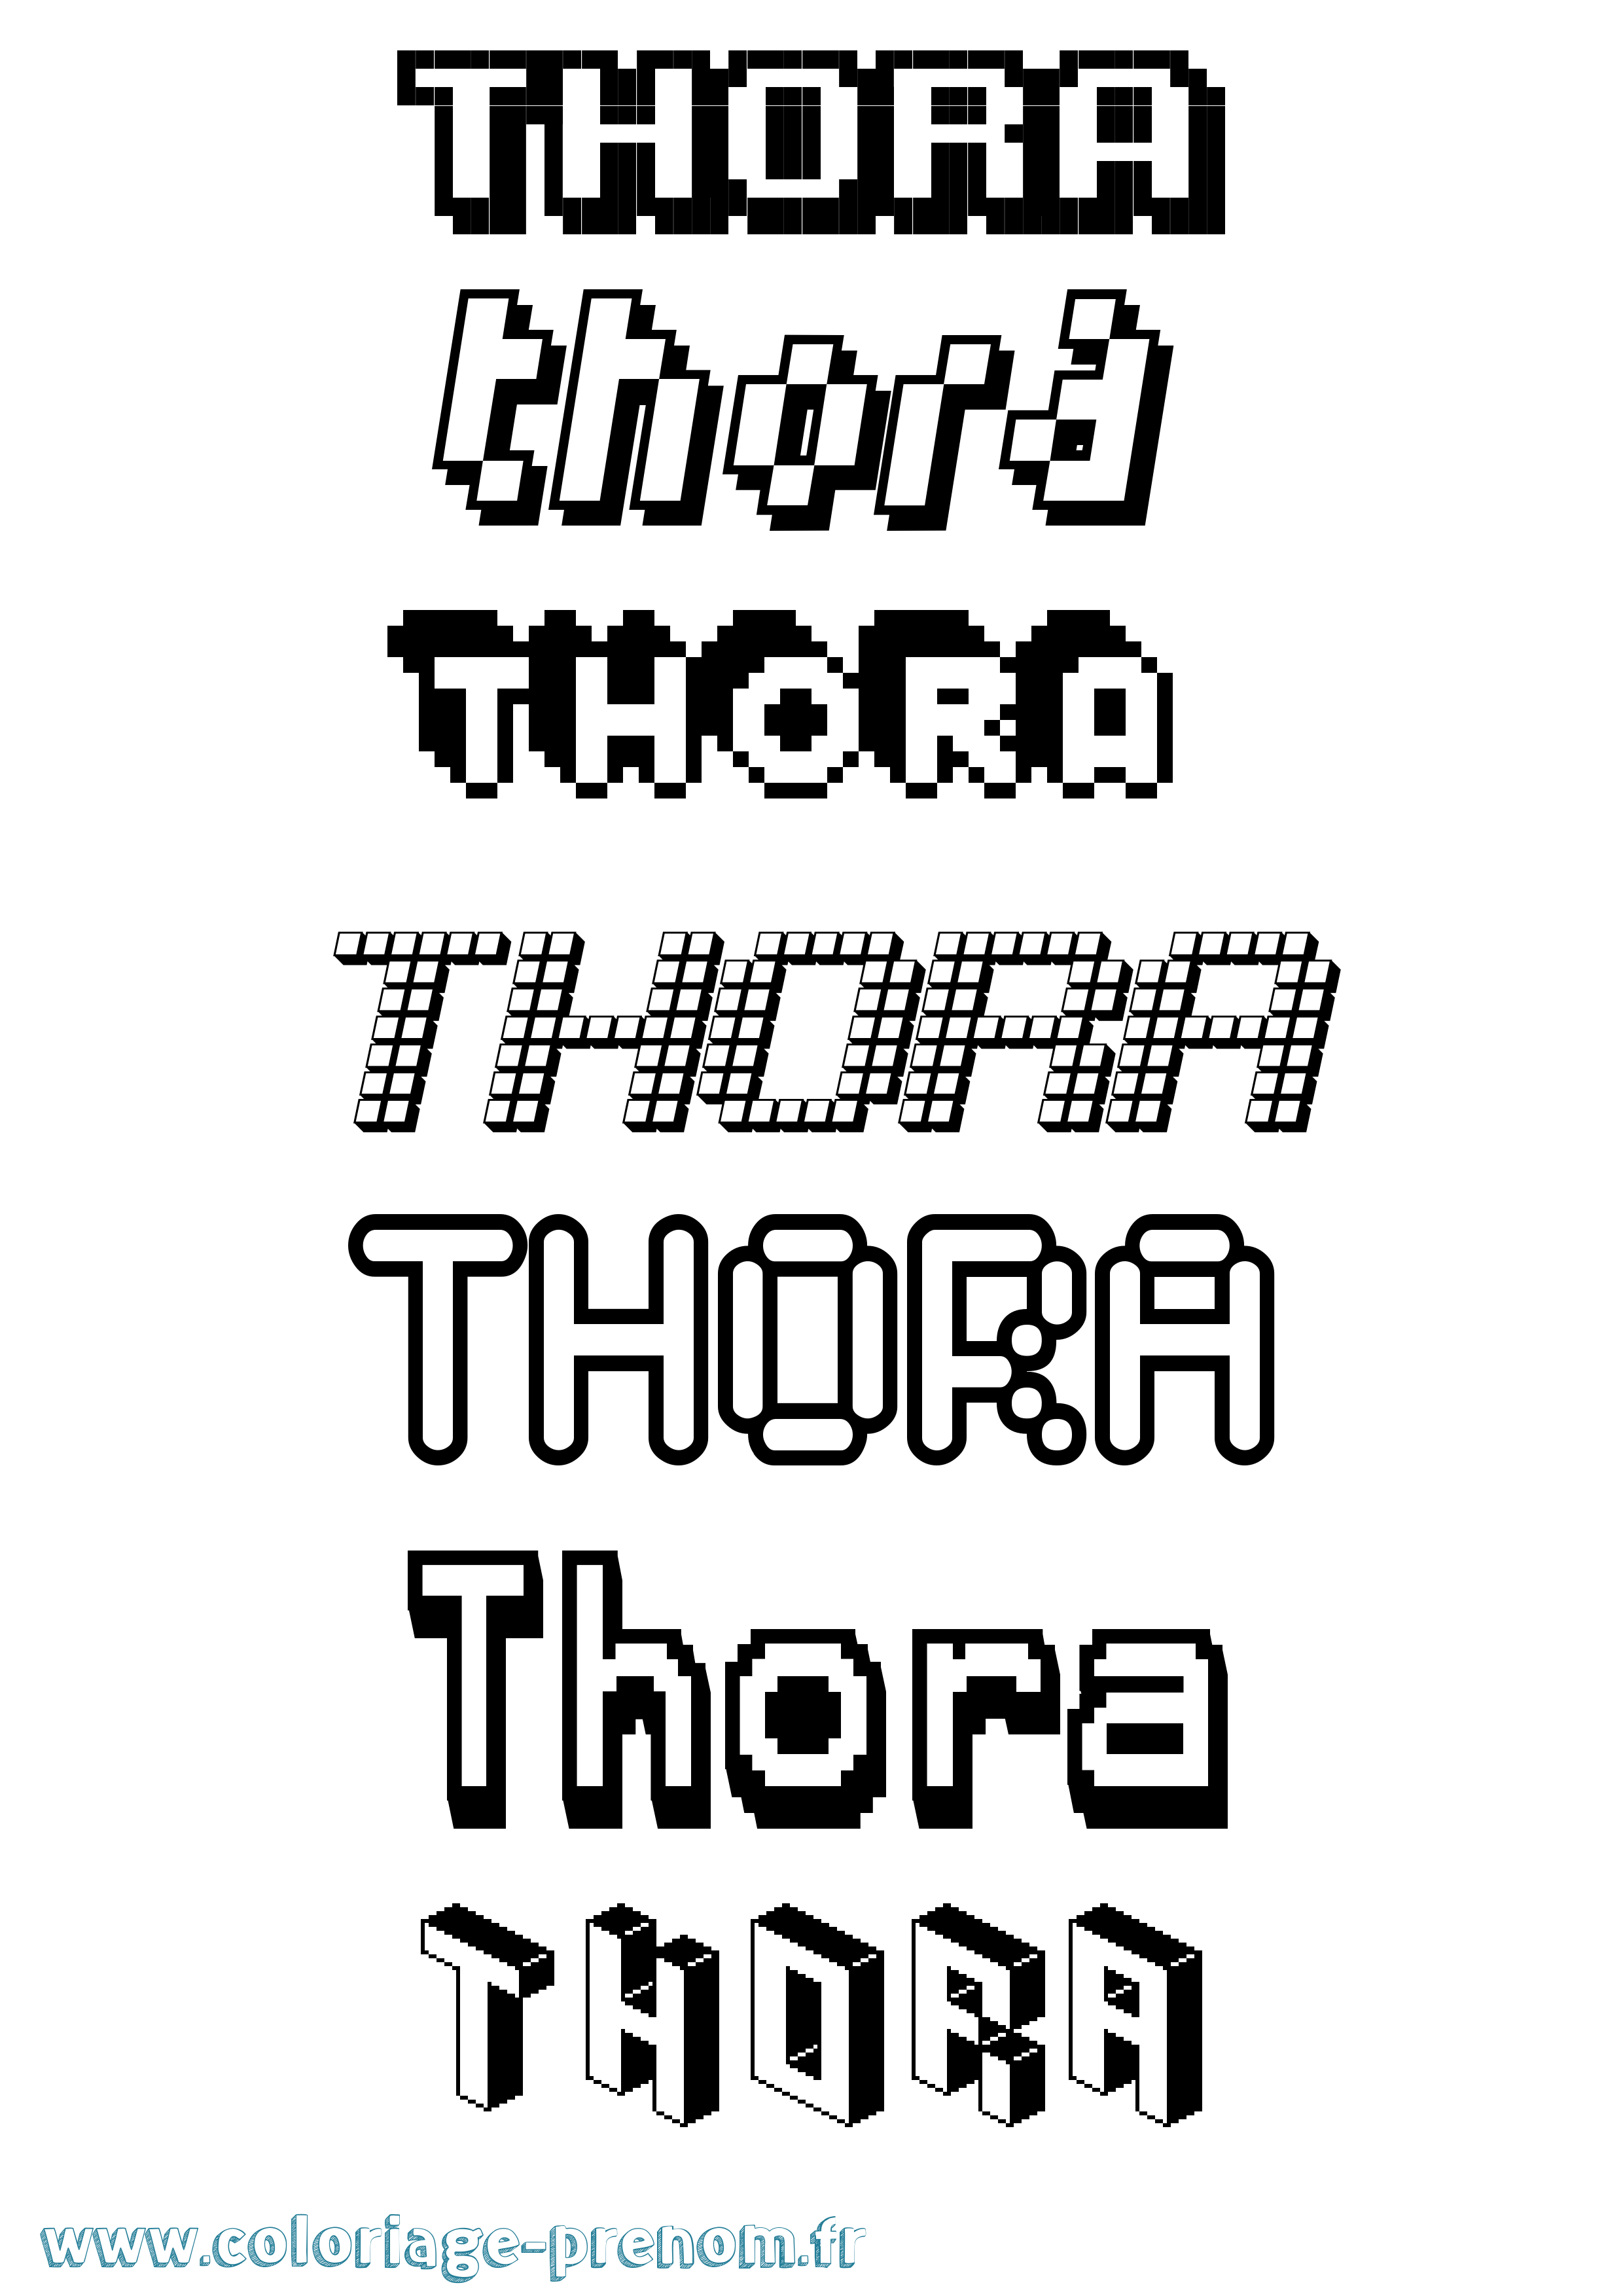 Coloriage prénom Thora Pixel